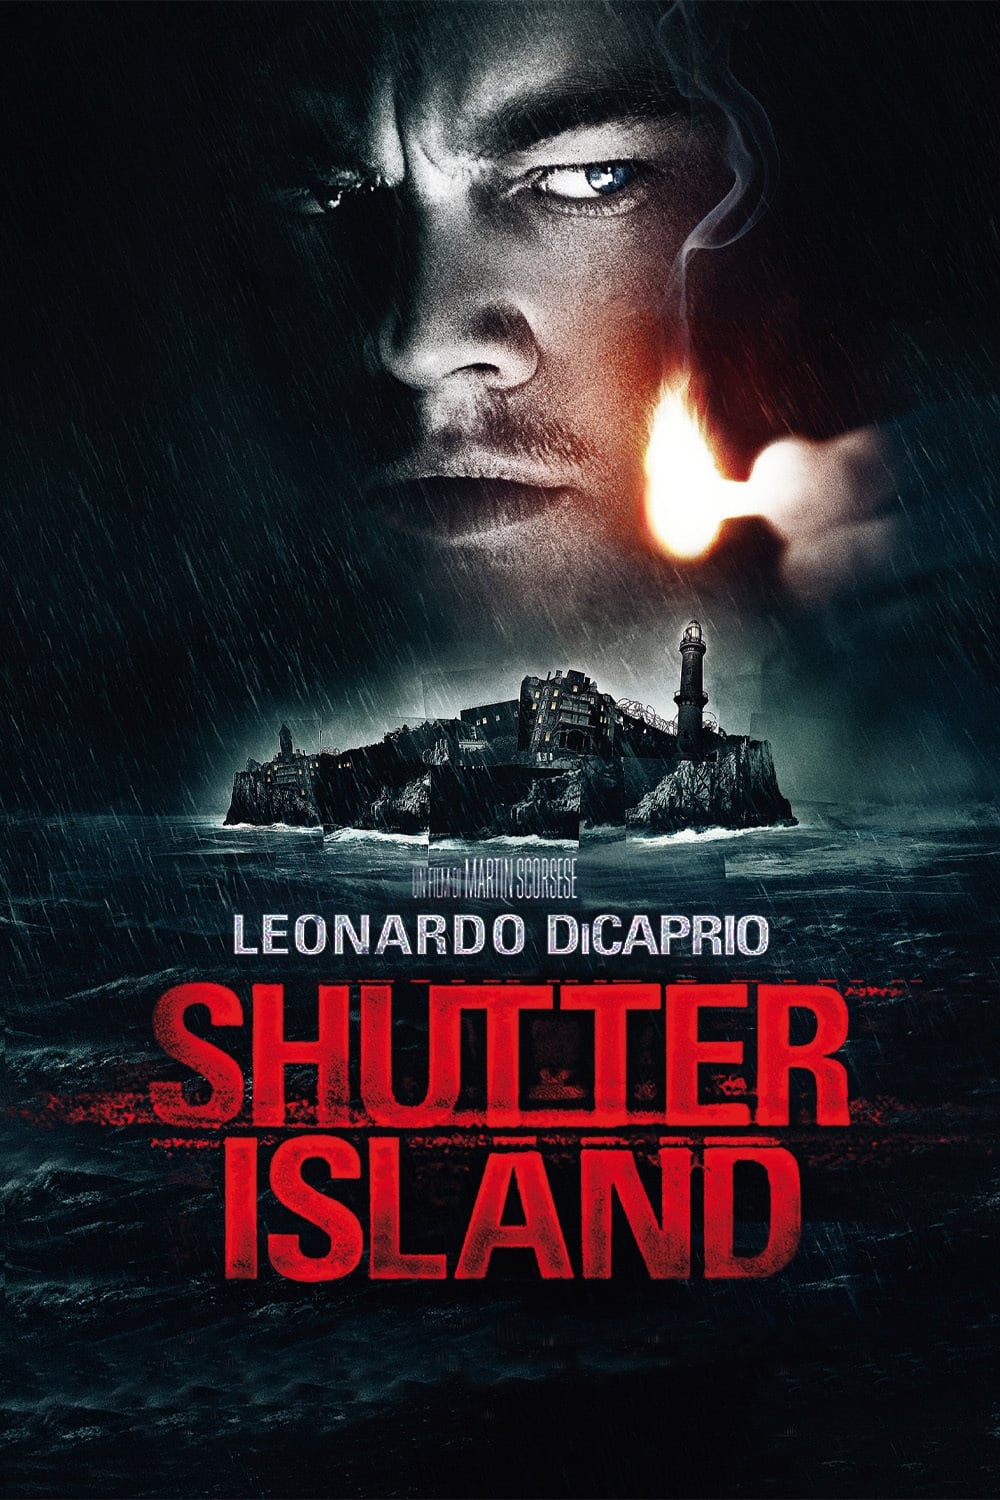 shutter island movie review essay